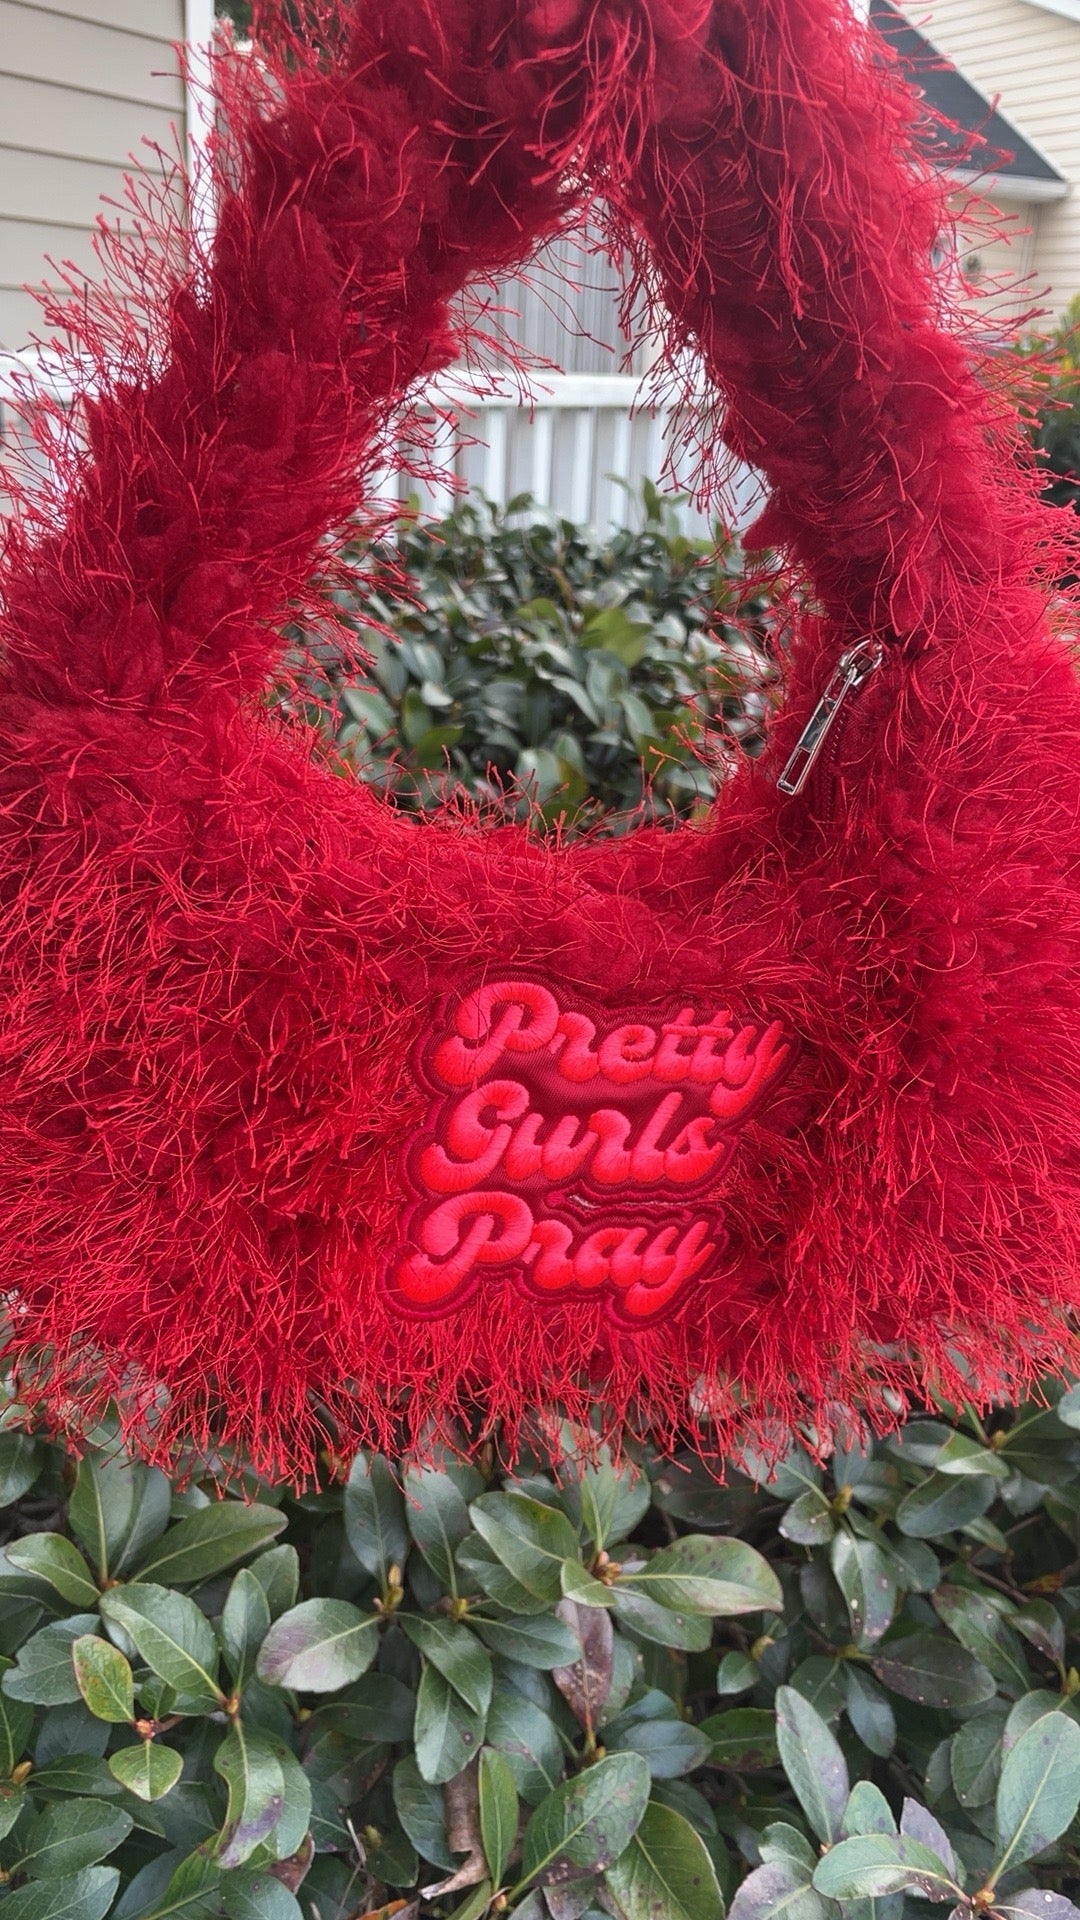 Pretty Gurls Pray Handbag Red